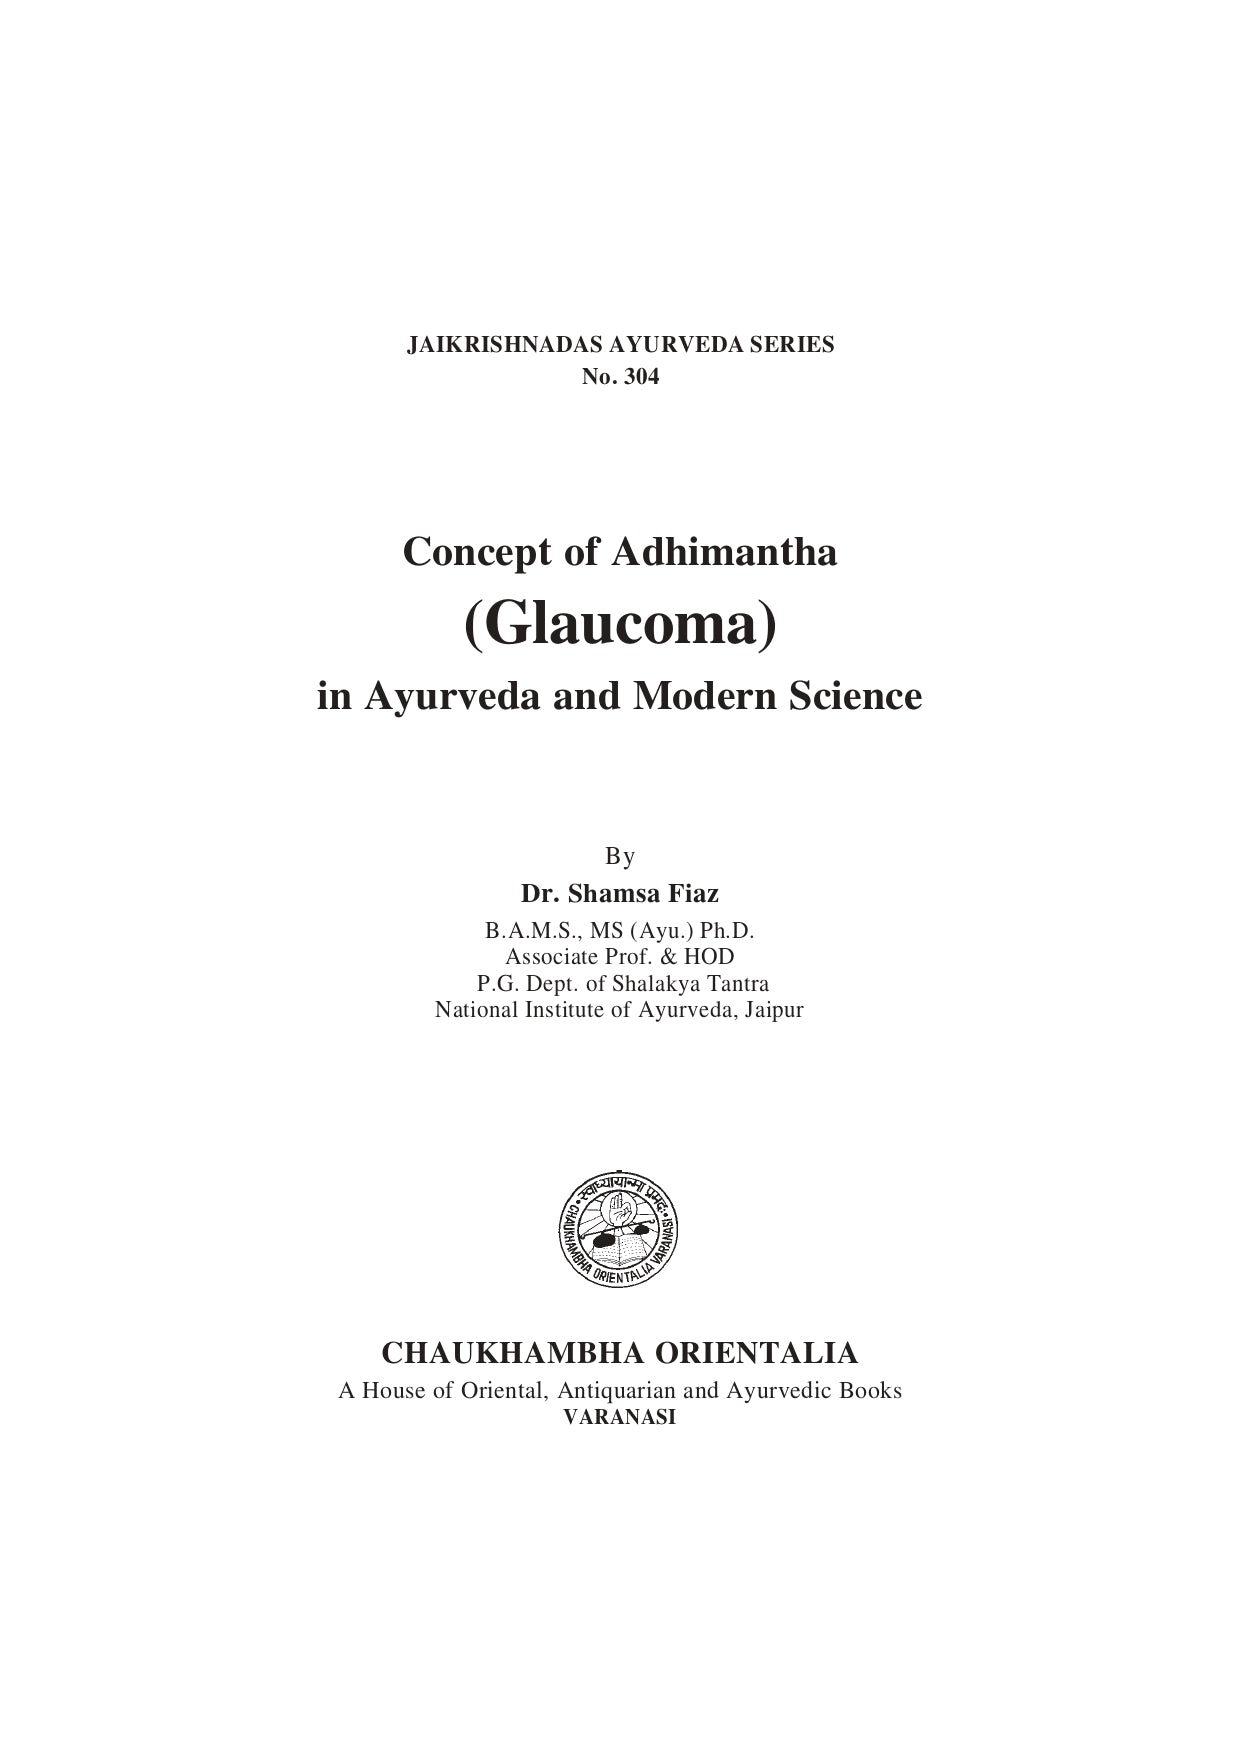 Chaukhambha Orientalia Concept of Adhimantha (Glaucoma) in Ayurveda and Modern